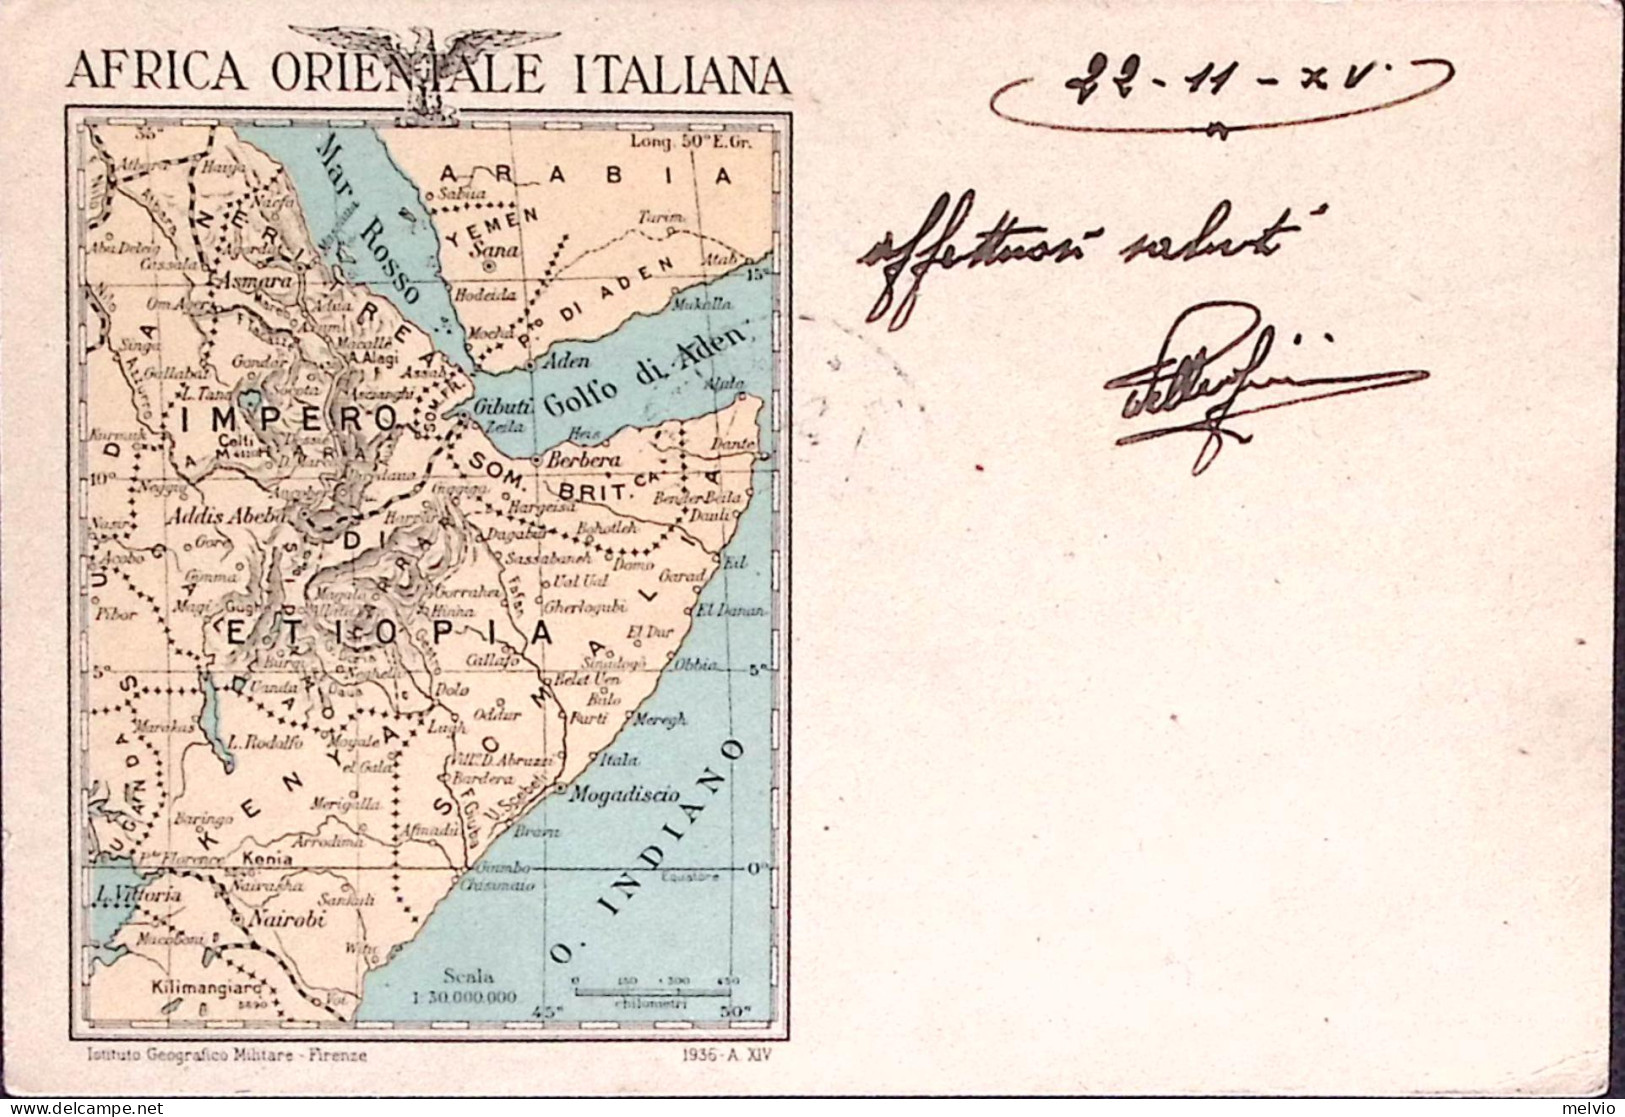 1935-Cartolina Franchigia Per AO Carta Africa Orientale Italiana Viaggiata - Italian Eastern Africa